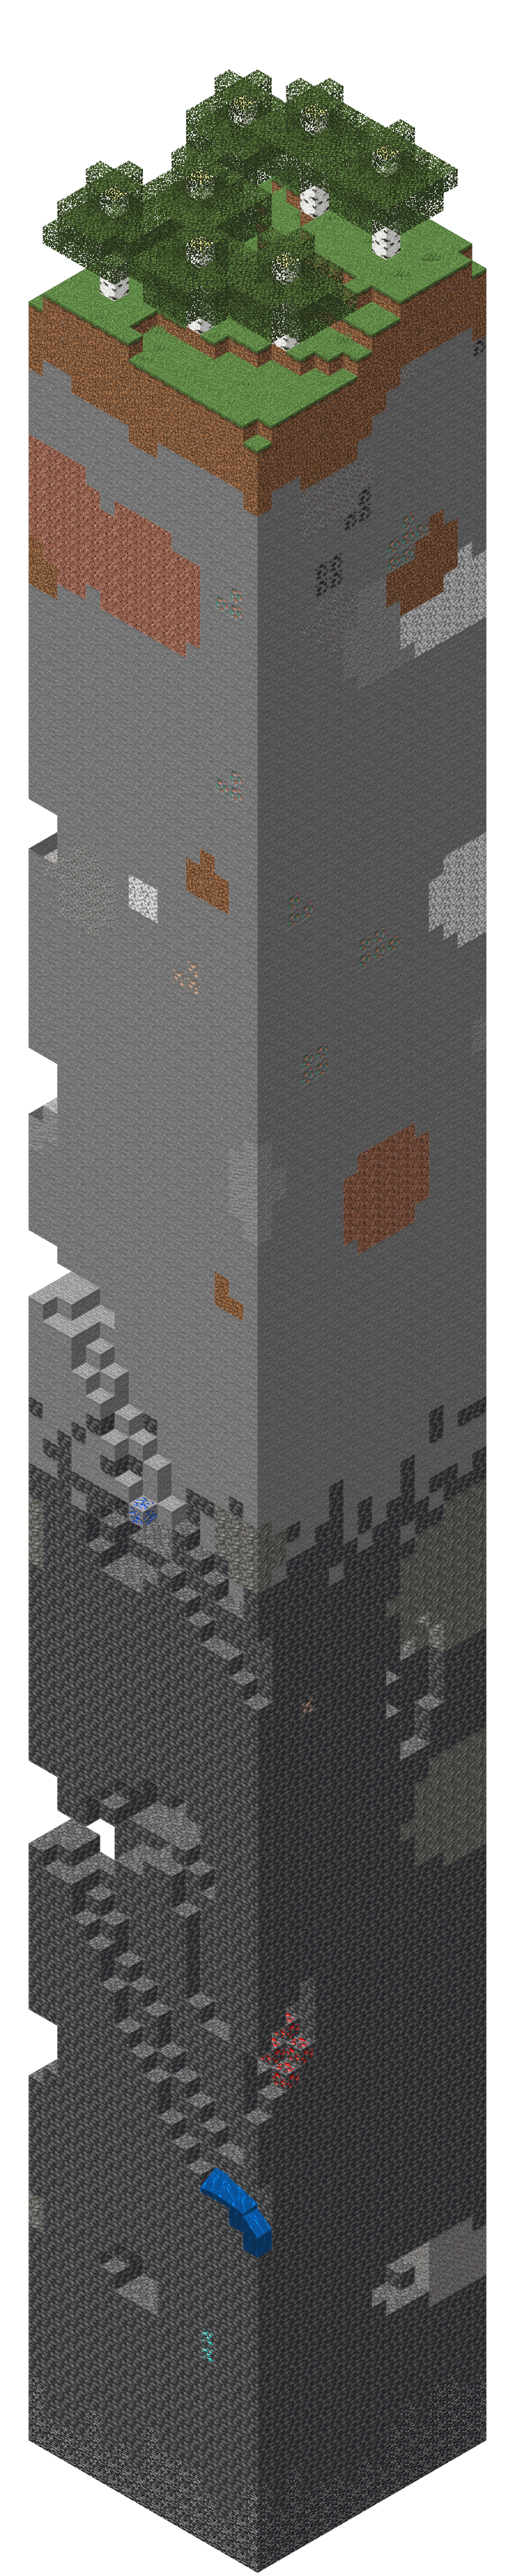 NEW VERSION 2.0 )ONE PIECE MAP BLOX FRUIT ADVENTURE 1.16.5 Minecraft Map